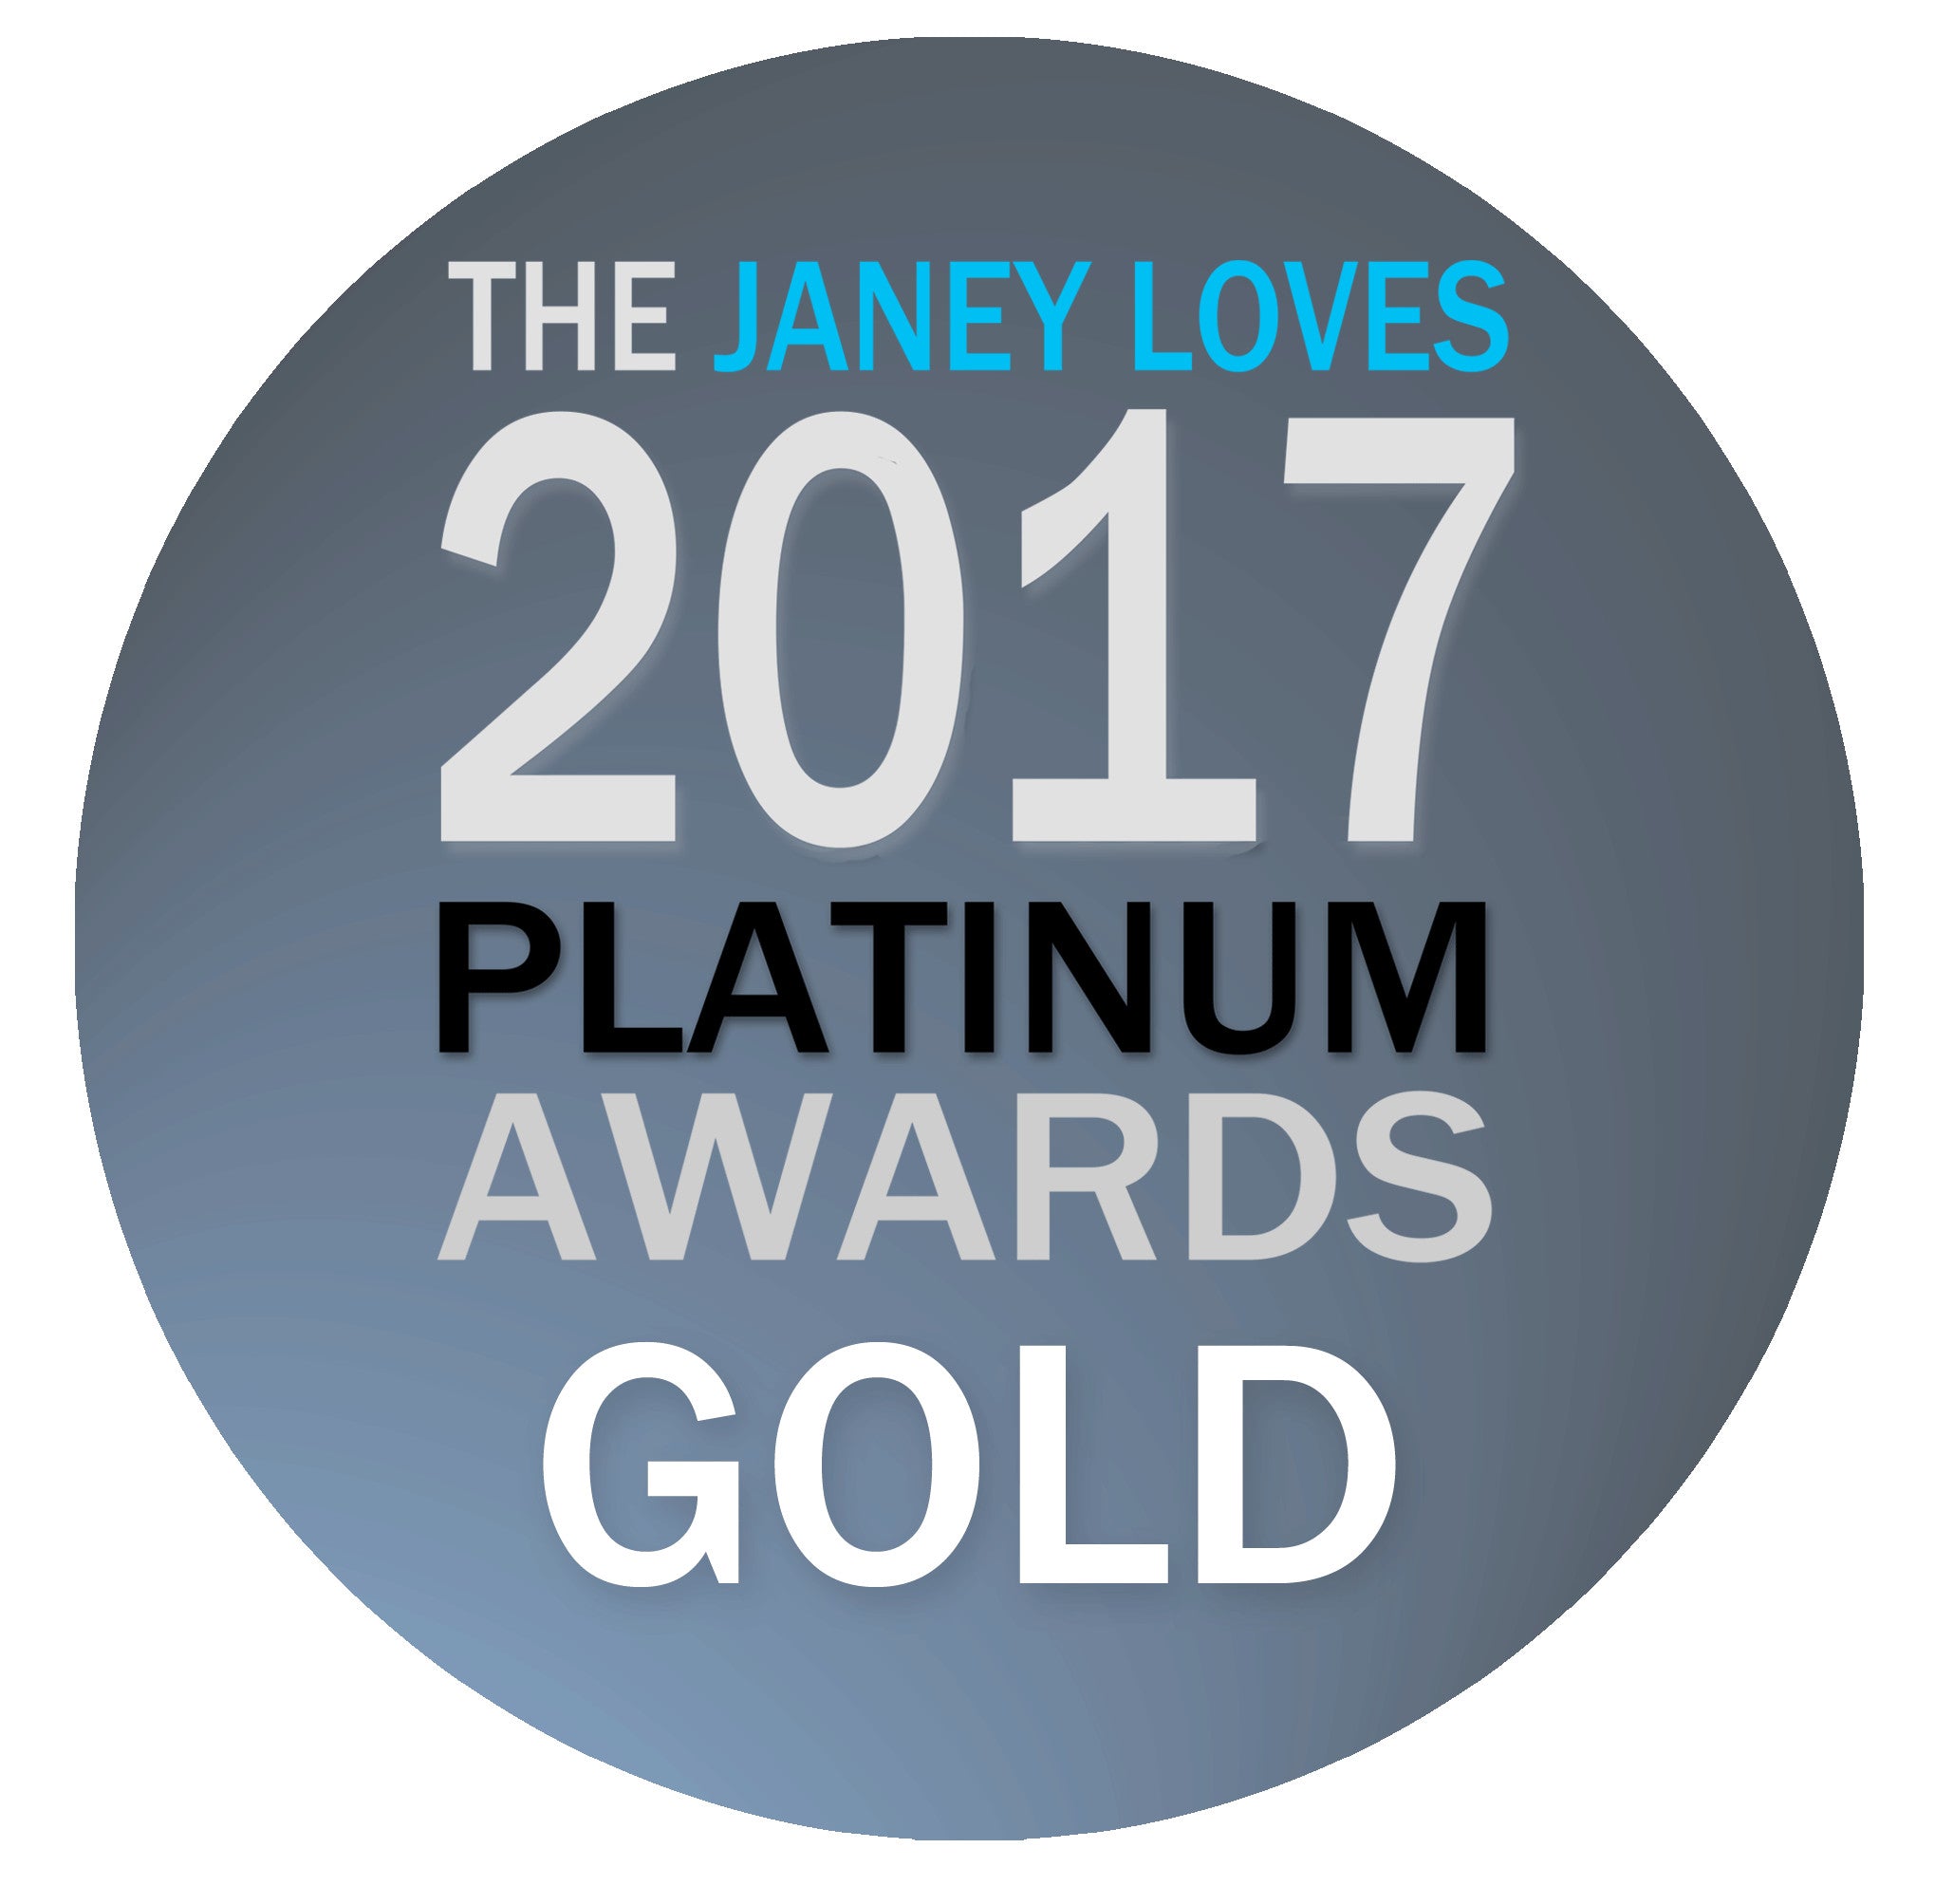 The Janey Loves 2017 Platinum Awards Gold Logo featuring Bulgarian Rose (Rosa Damascena).